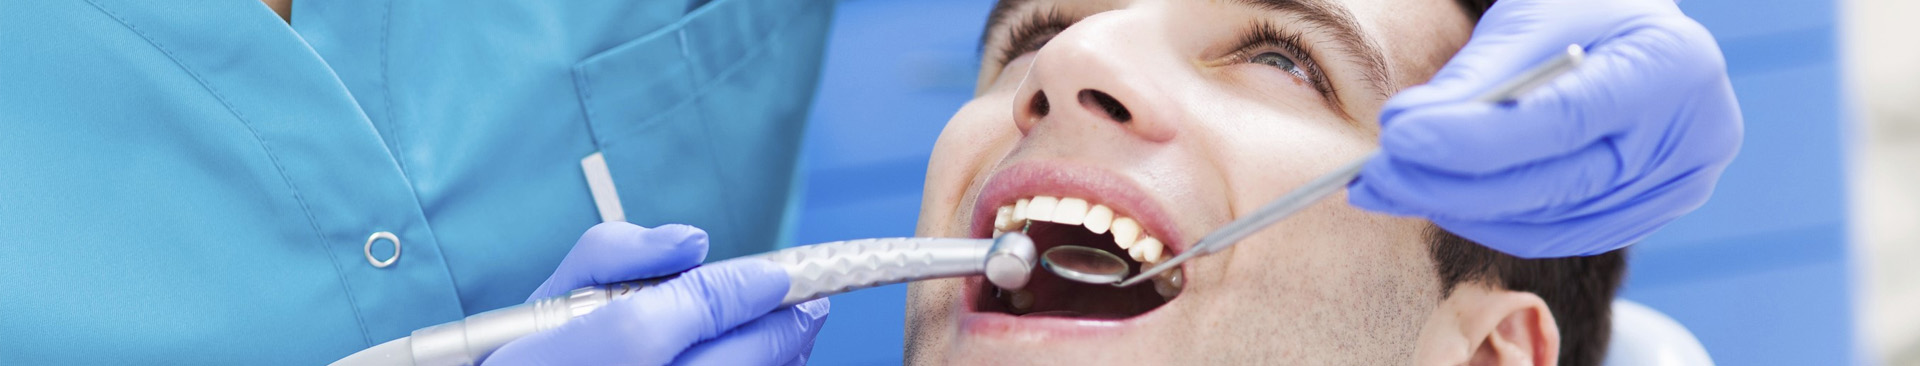 Plano Amil Dental Empresarial